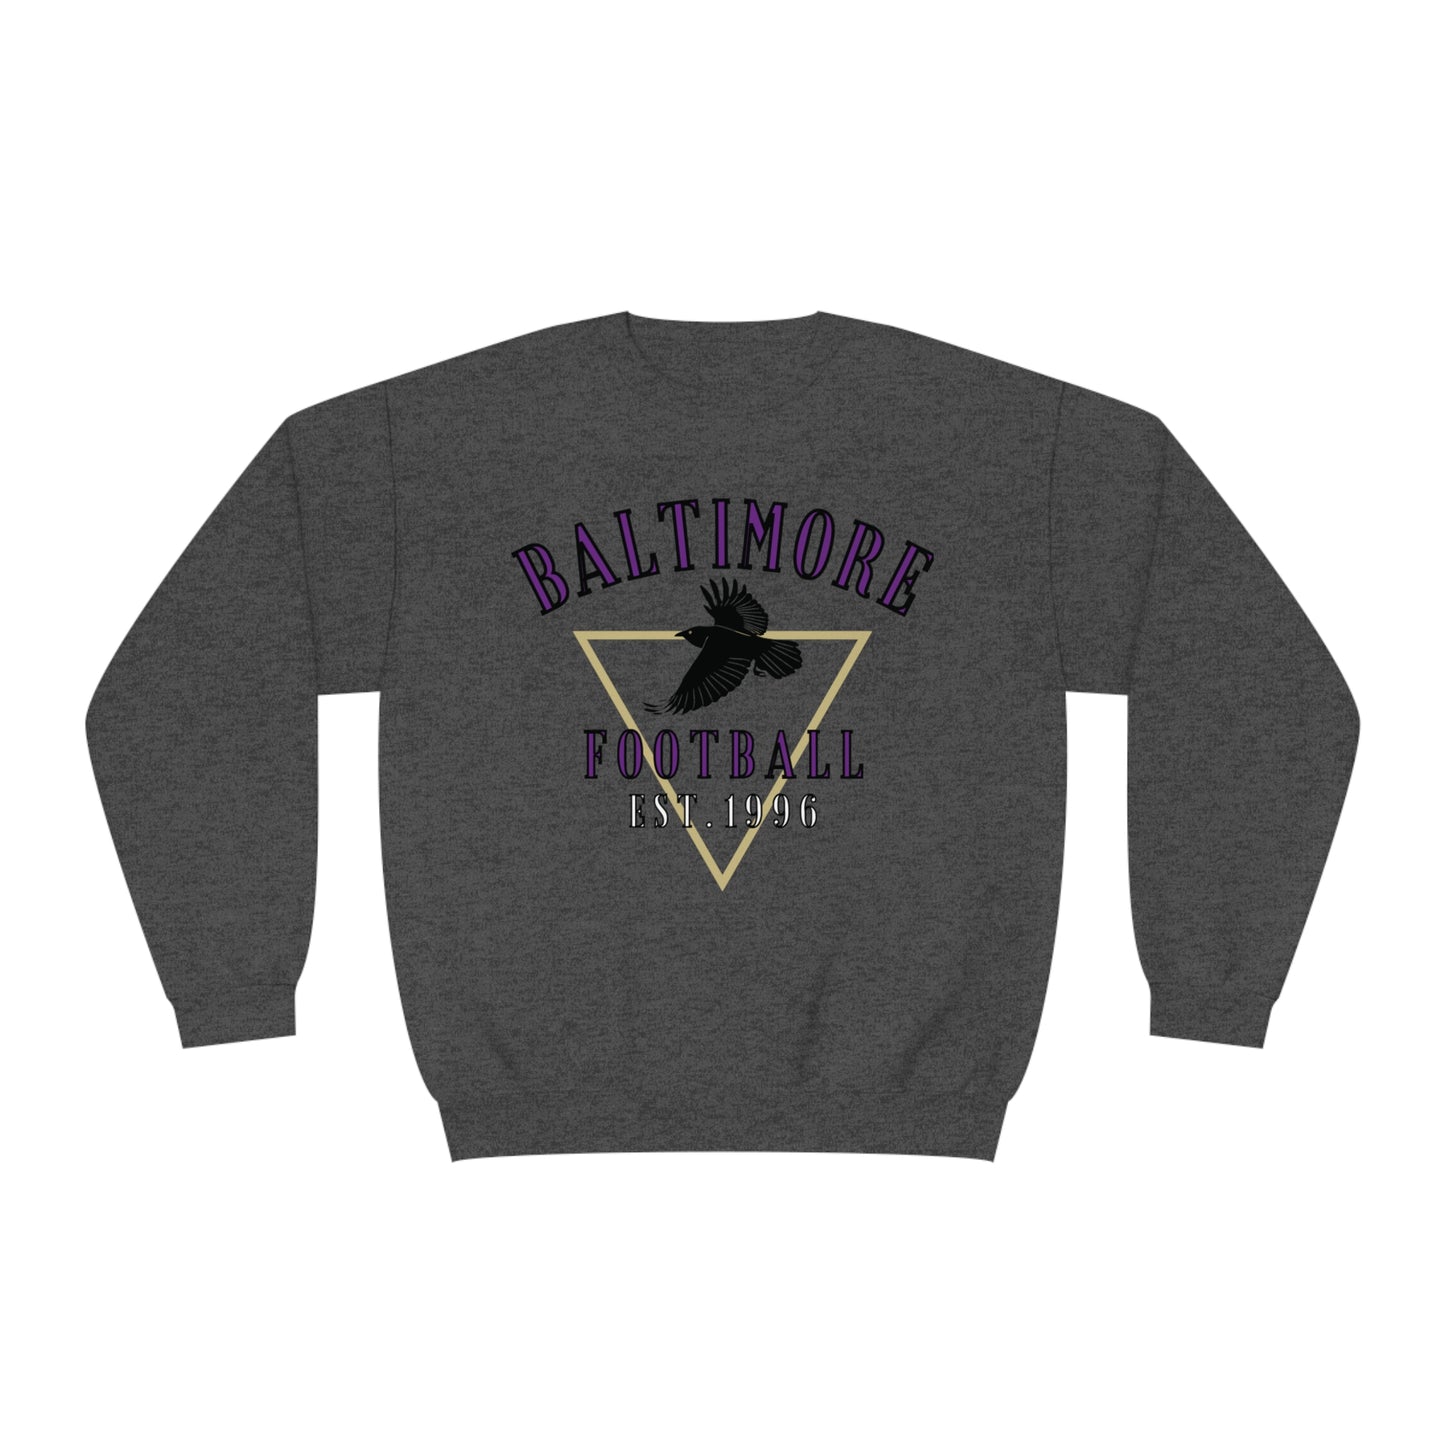 Vintage Baltimore Ravens Crewneck Sweatshirt  - NFL Football Hoodie - Retro Sweatshirt Oversized Game Day Apparel - Design 3